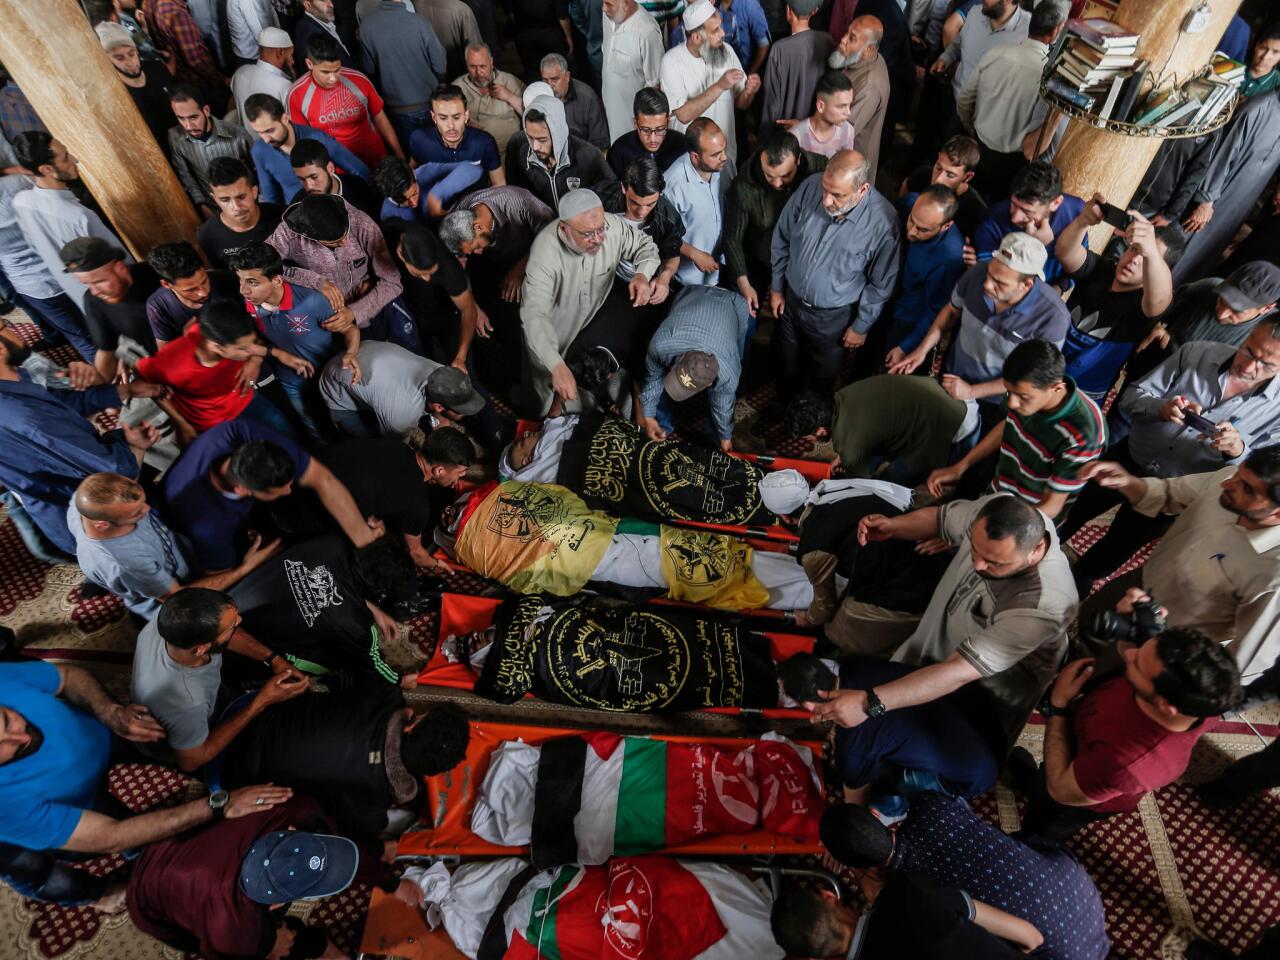 Violence flares between Gaza and Israel